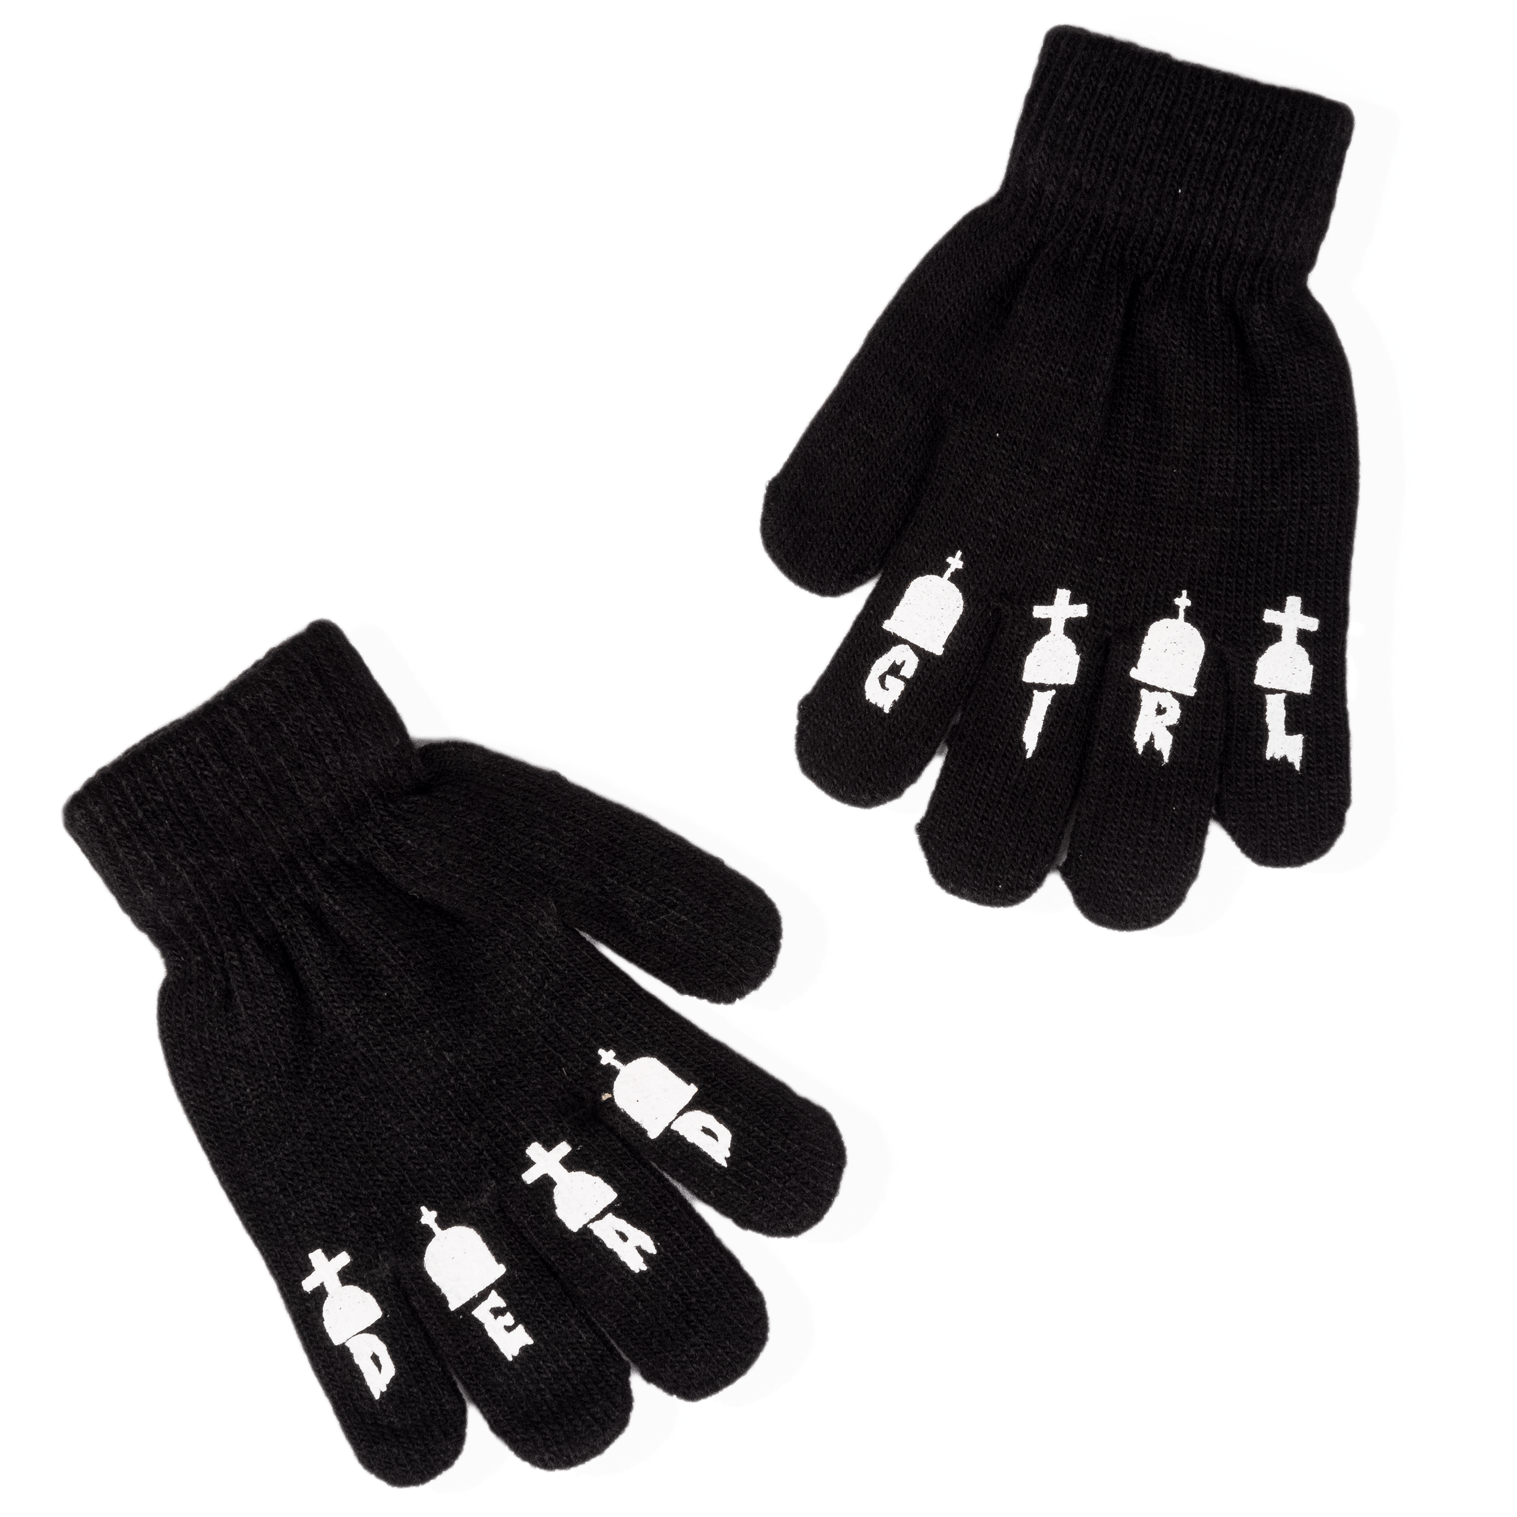 Too Fast | Gloves Winter Knit | Dead Girl